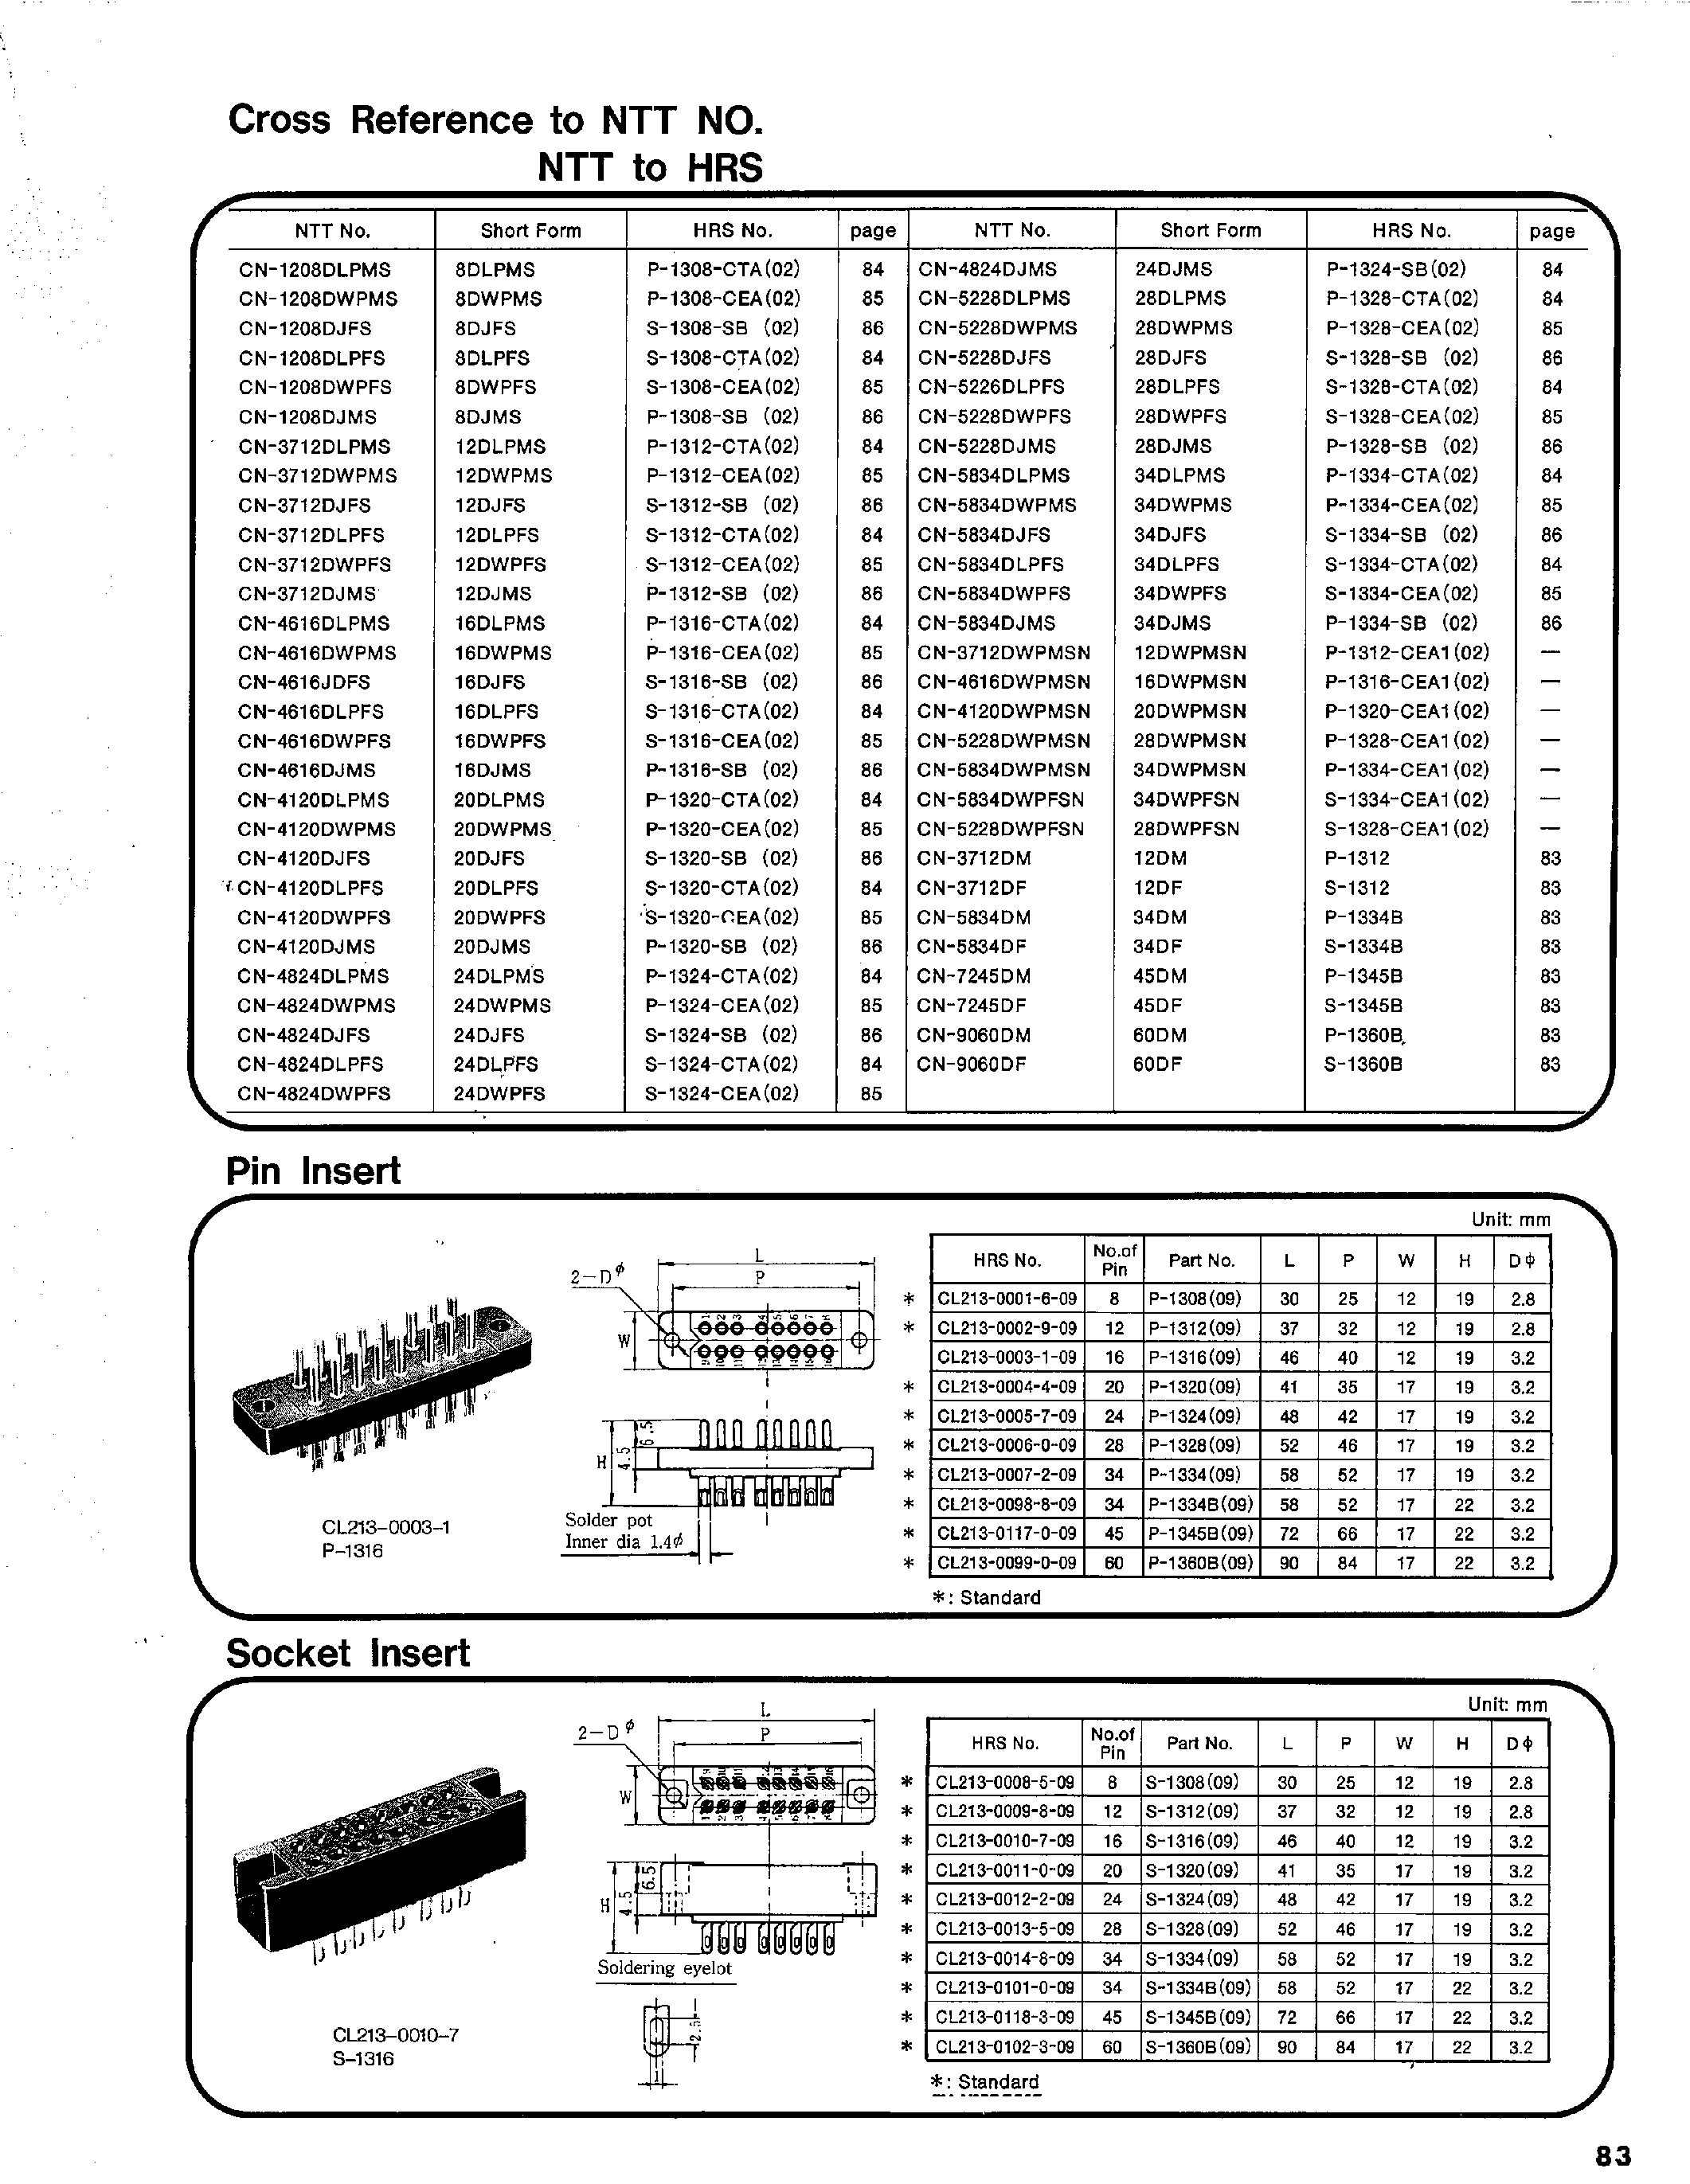 Datasheet P-138-CE - 1300 SERIES RECTANGULAR CONNECTORS page 2